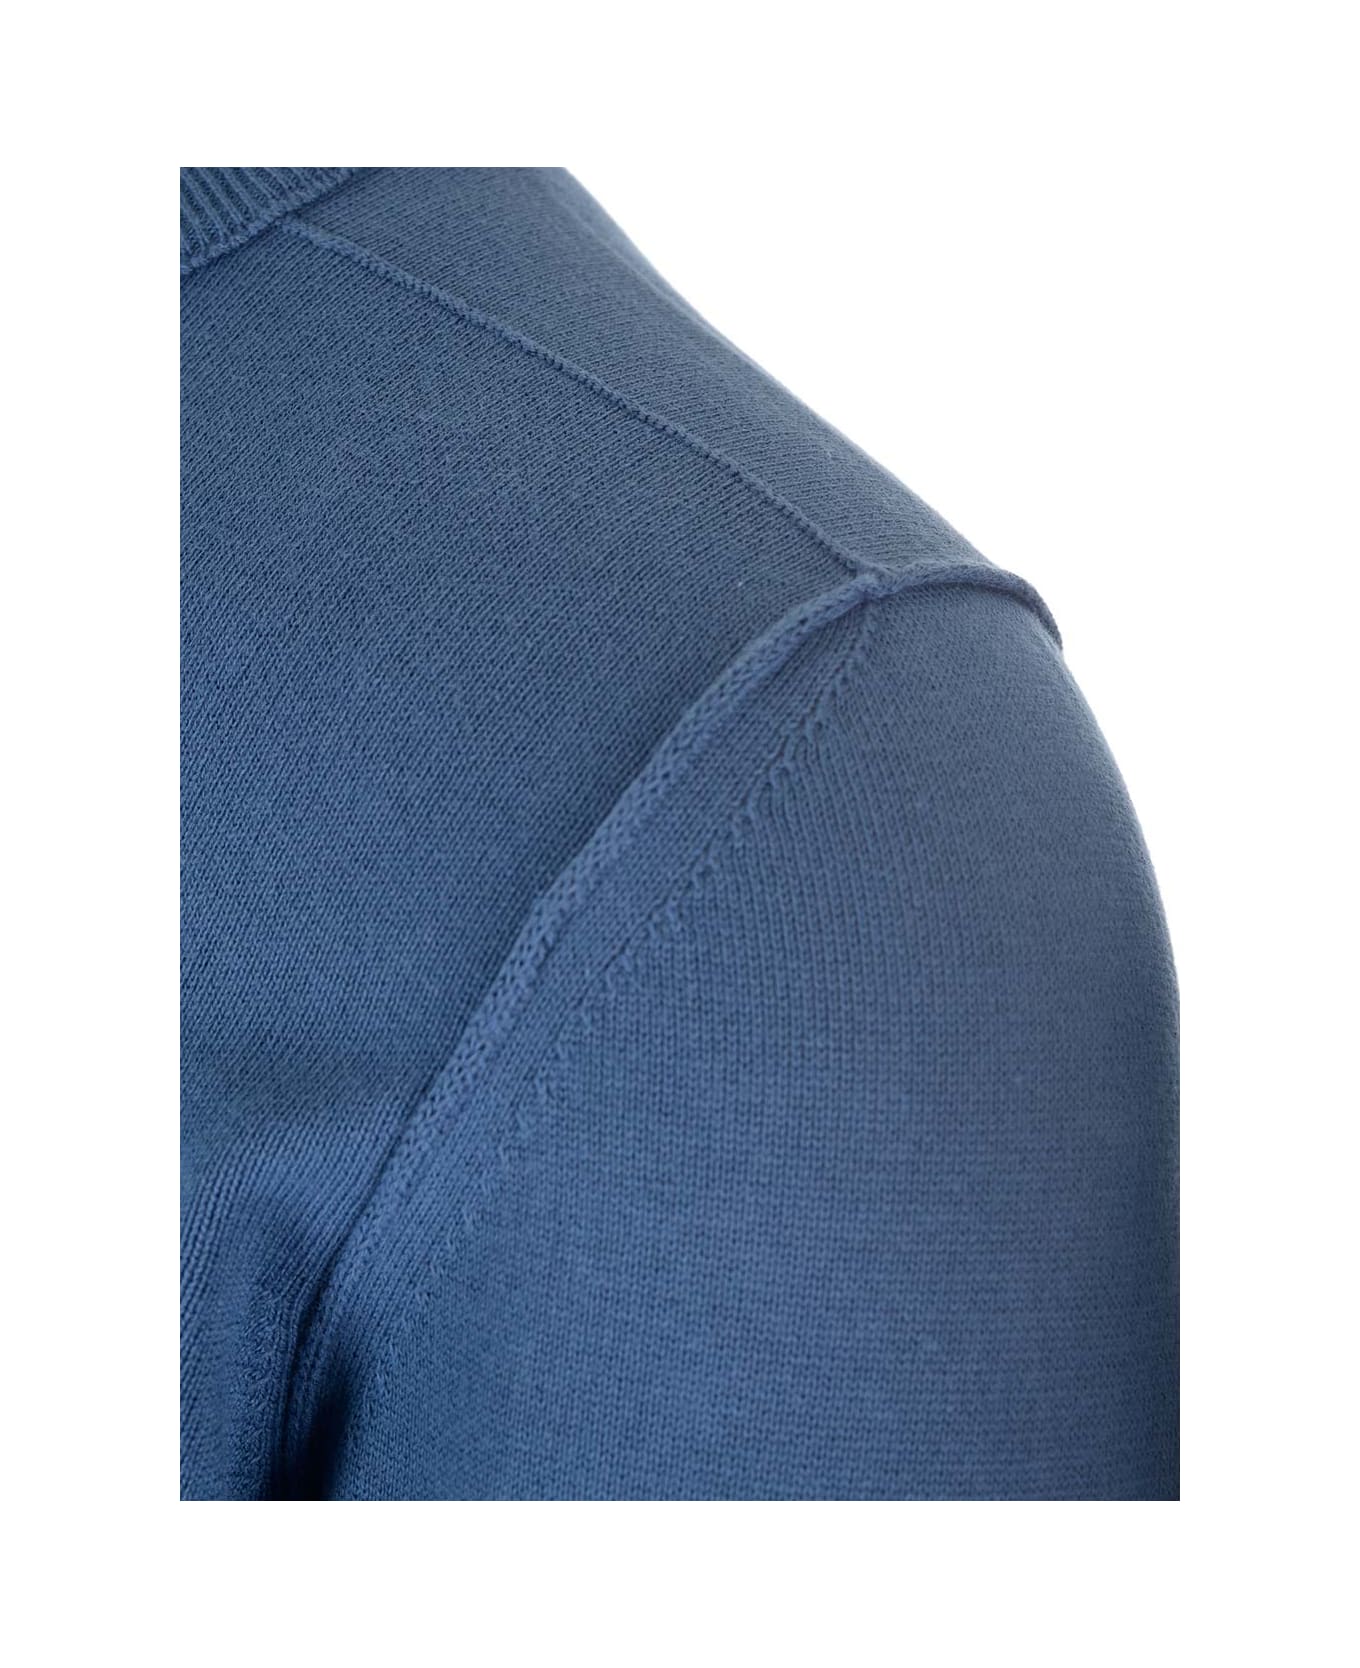 Stone Island Regular Fit Sweater - Blue